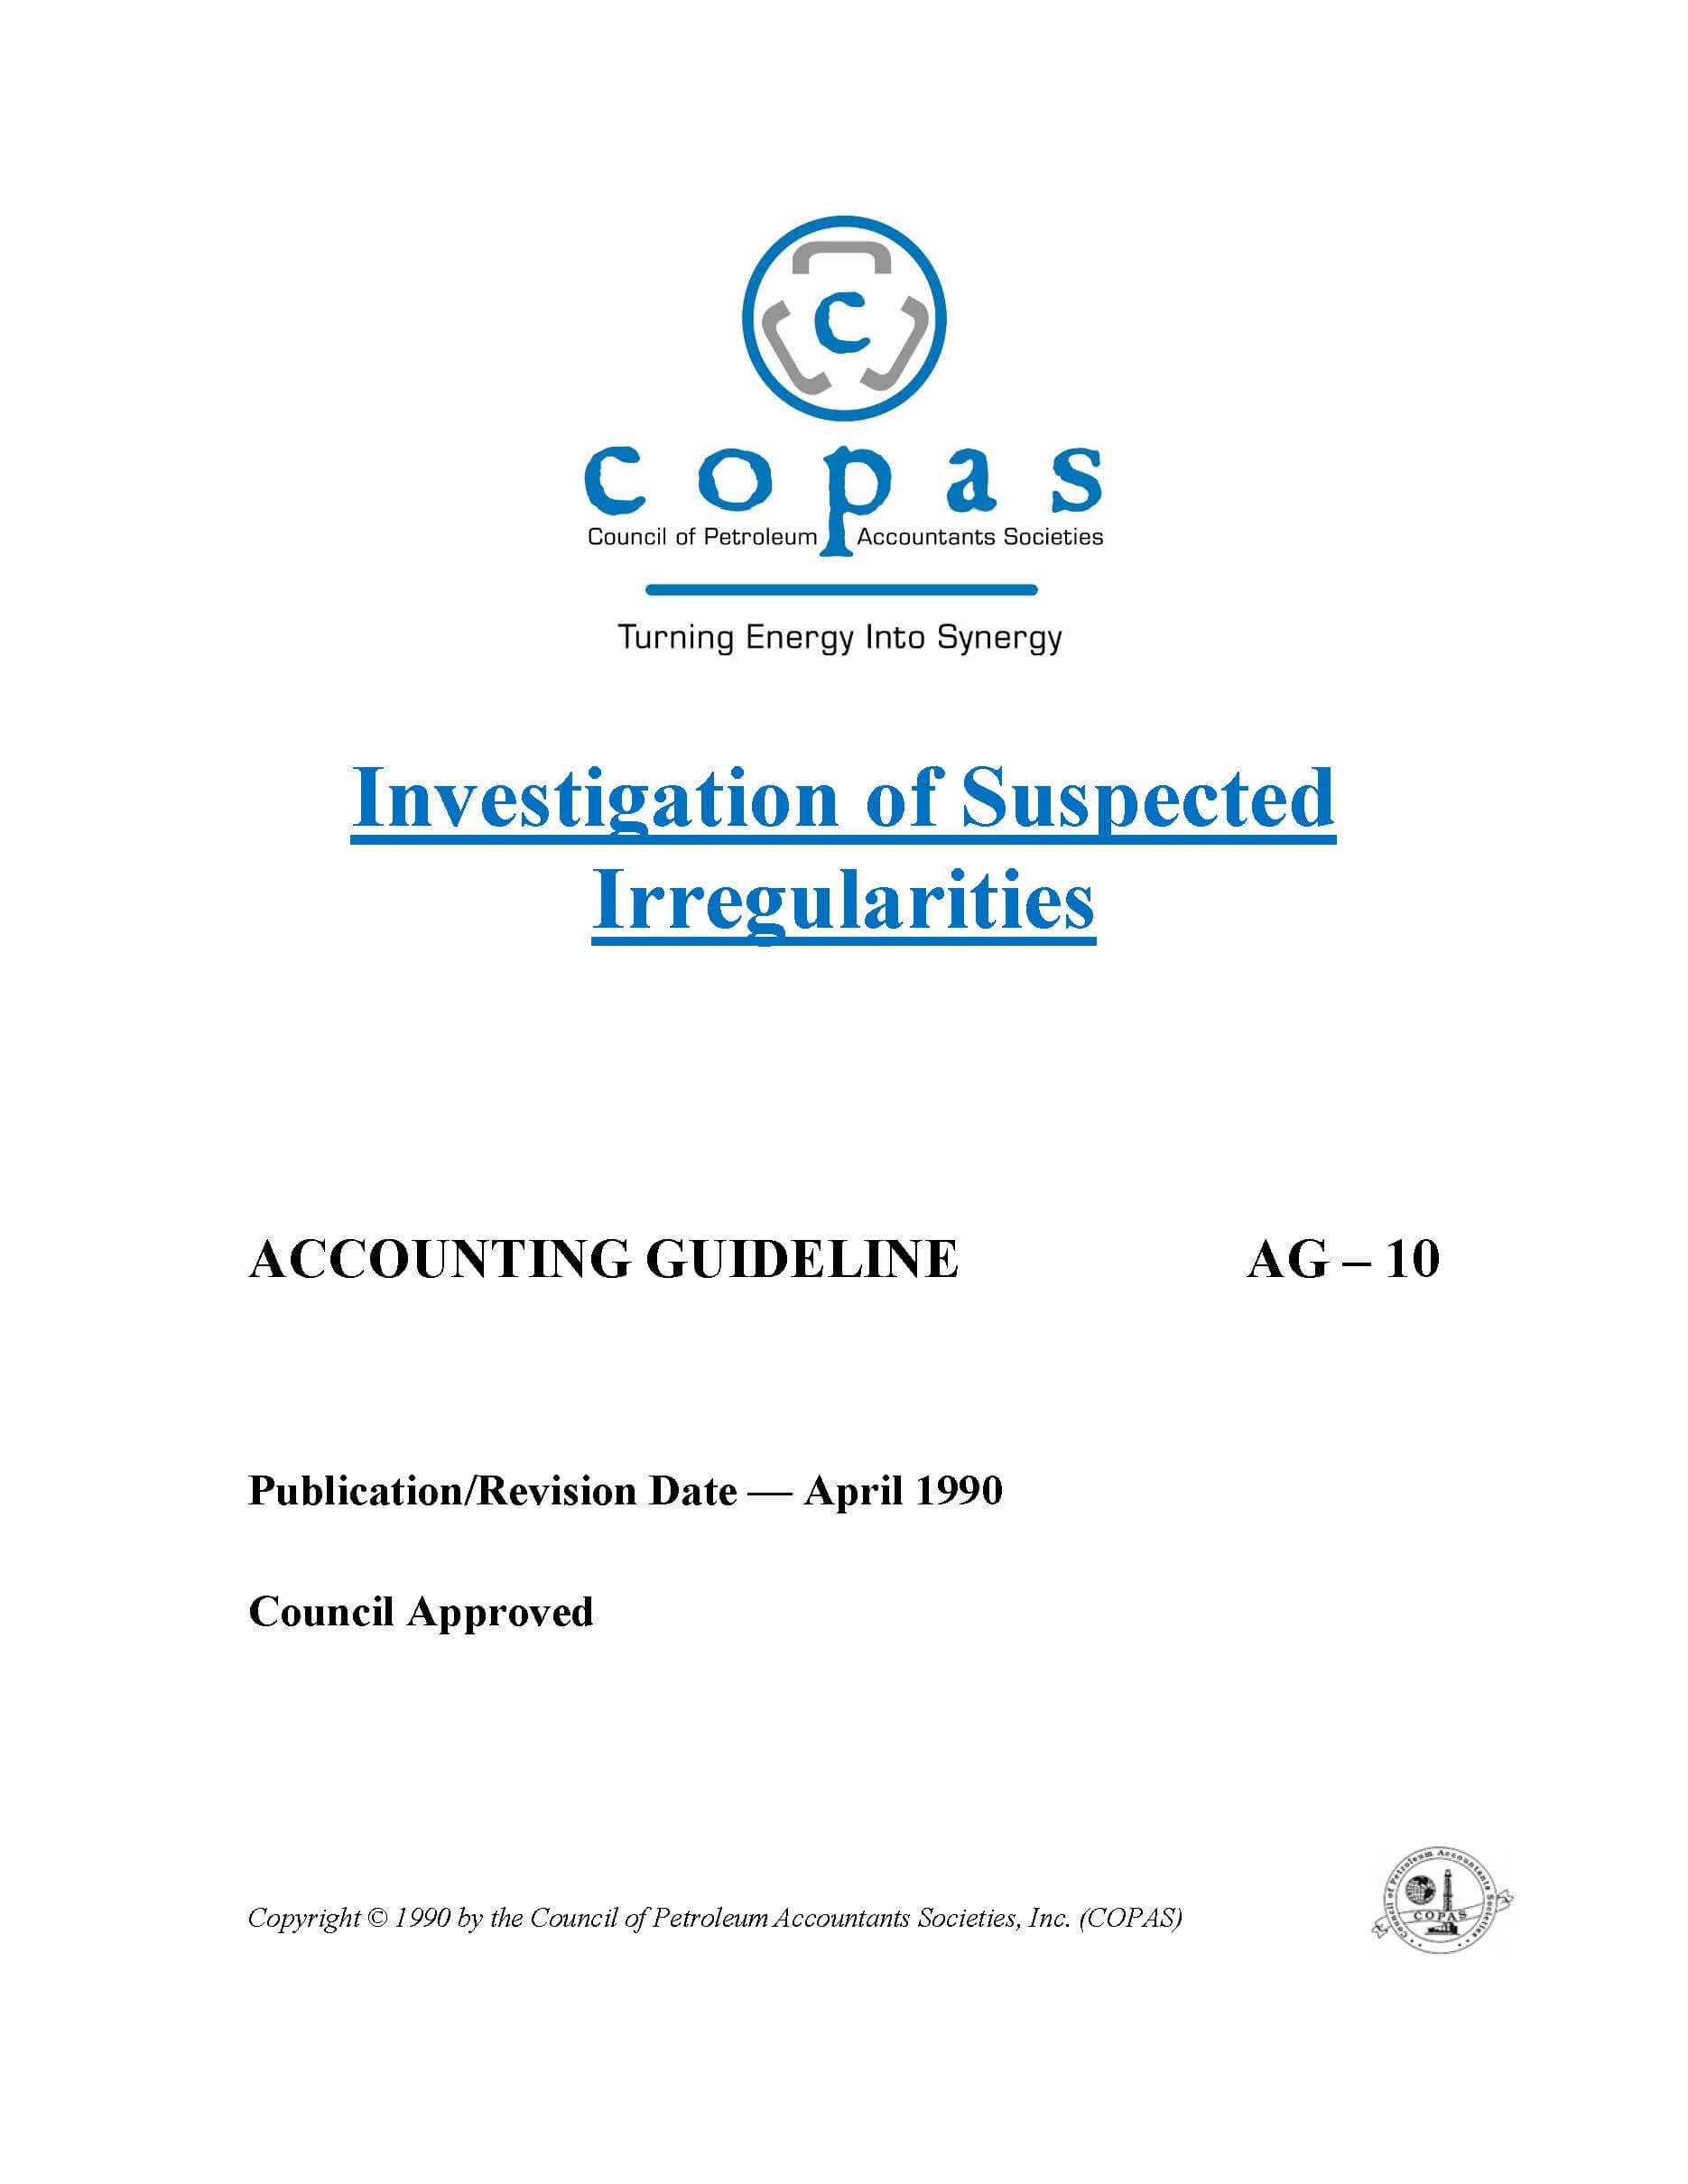 AG-10 Investigations Of Suspected Irregularities - products AG 10 Investigations of Suspected Irregularities27 - Council of Petroleum Accountants Societies